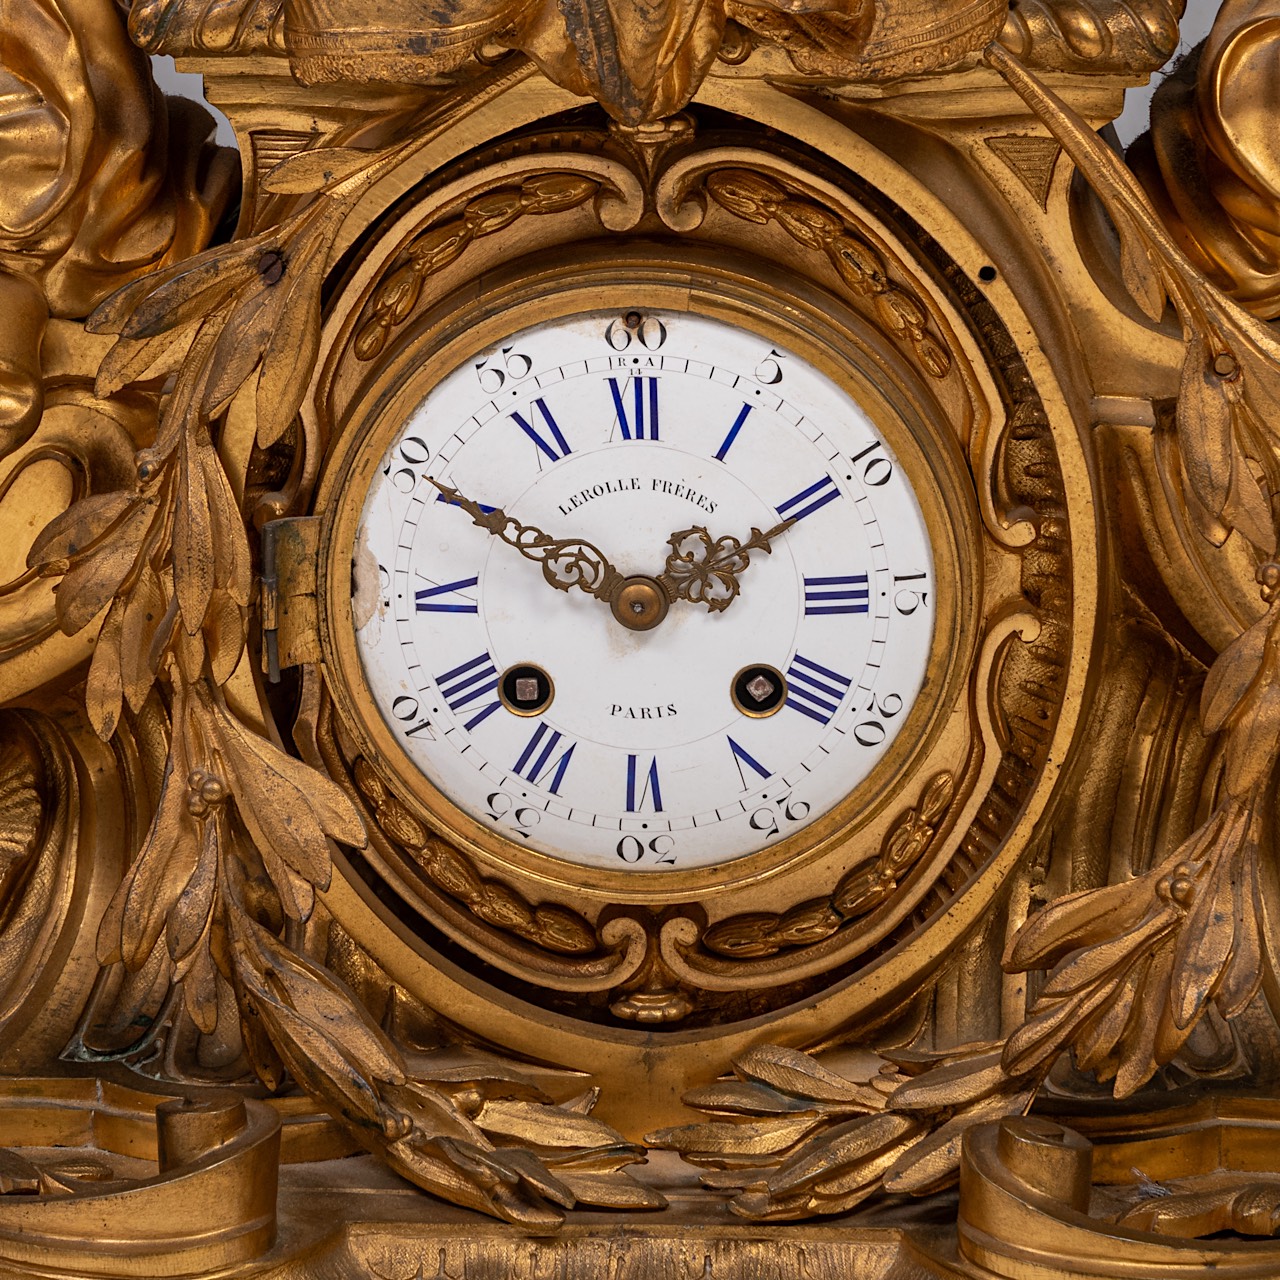 An imposing three-piece Napoleon III gilt bronze mantle clock, Lerolle Freres, Paris, H 70 - 82 cm - Image 8 of 12